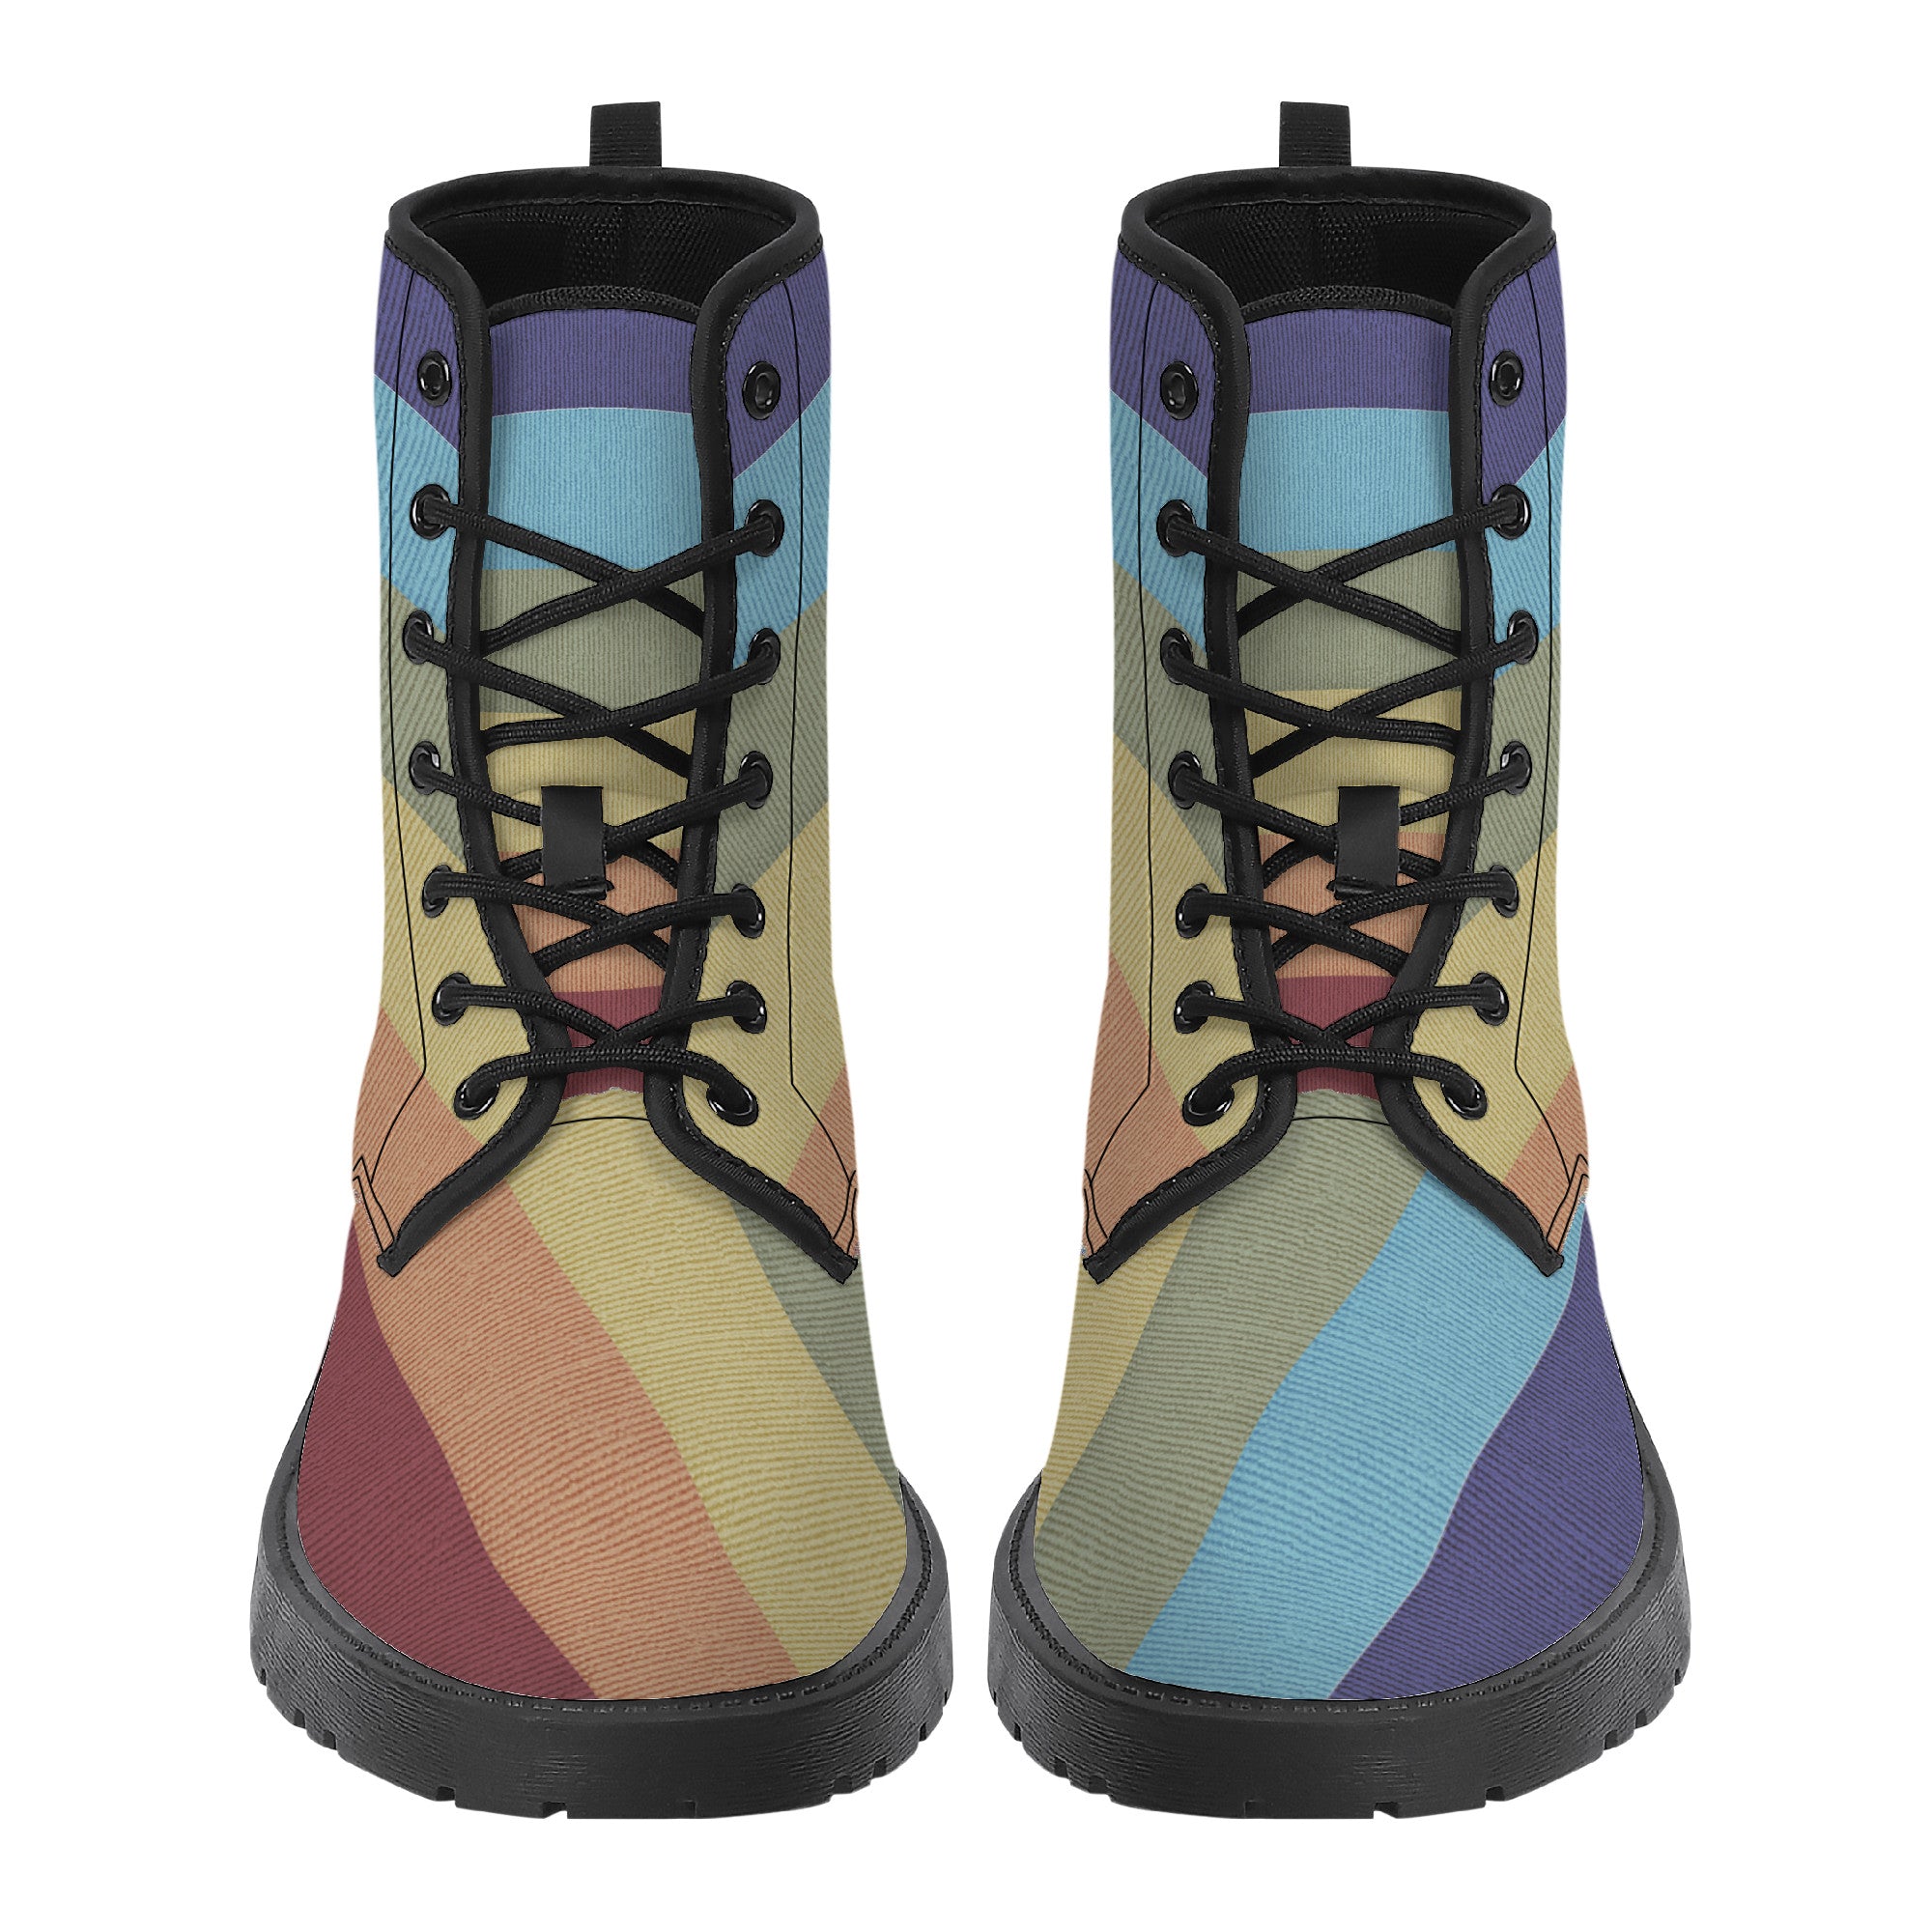 Cool shoes by Gayla Fox | Boots Customized | Shoe Zero